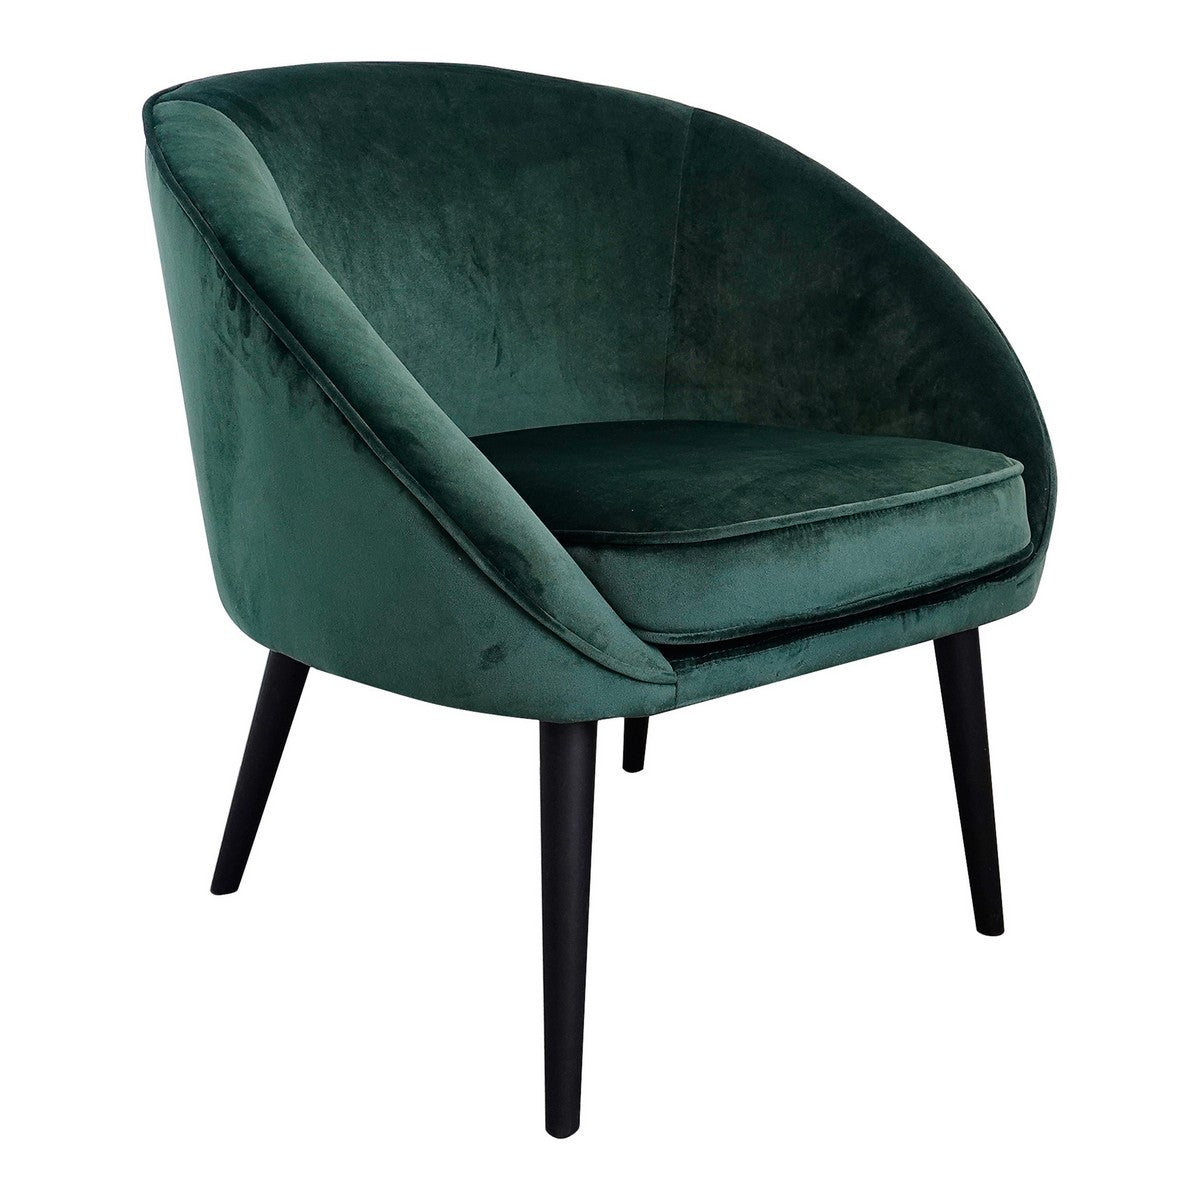 Moe's Home Collection Farah Chair Green - JW-1001-16